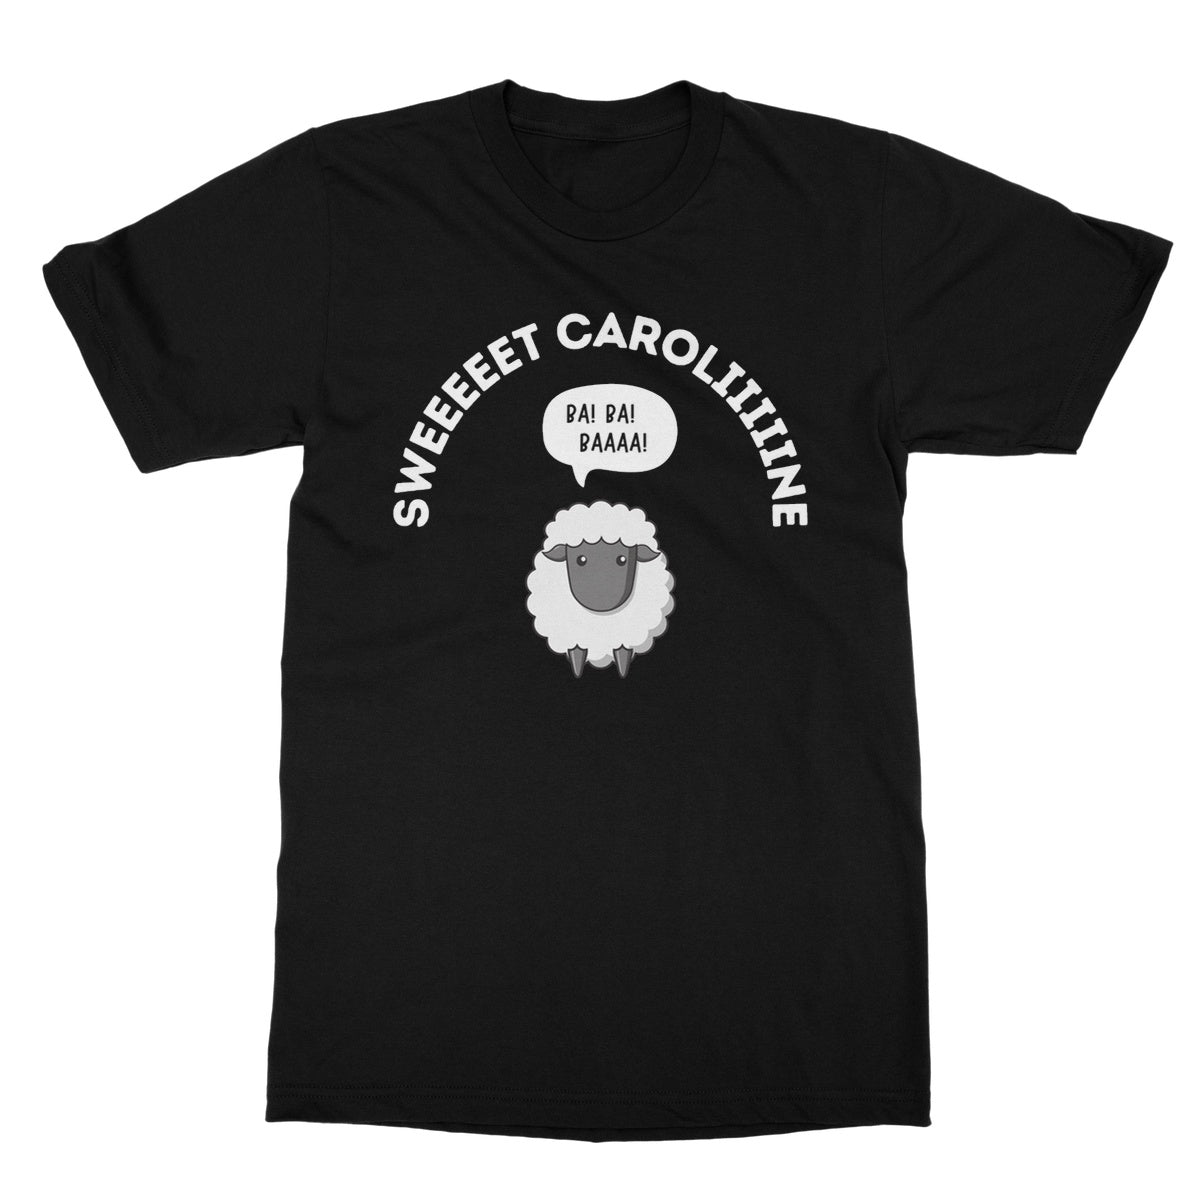 sweet caroline t shirt black